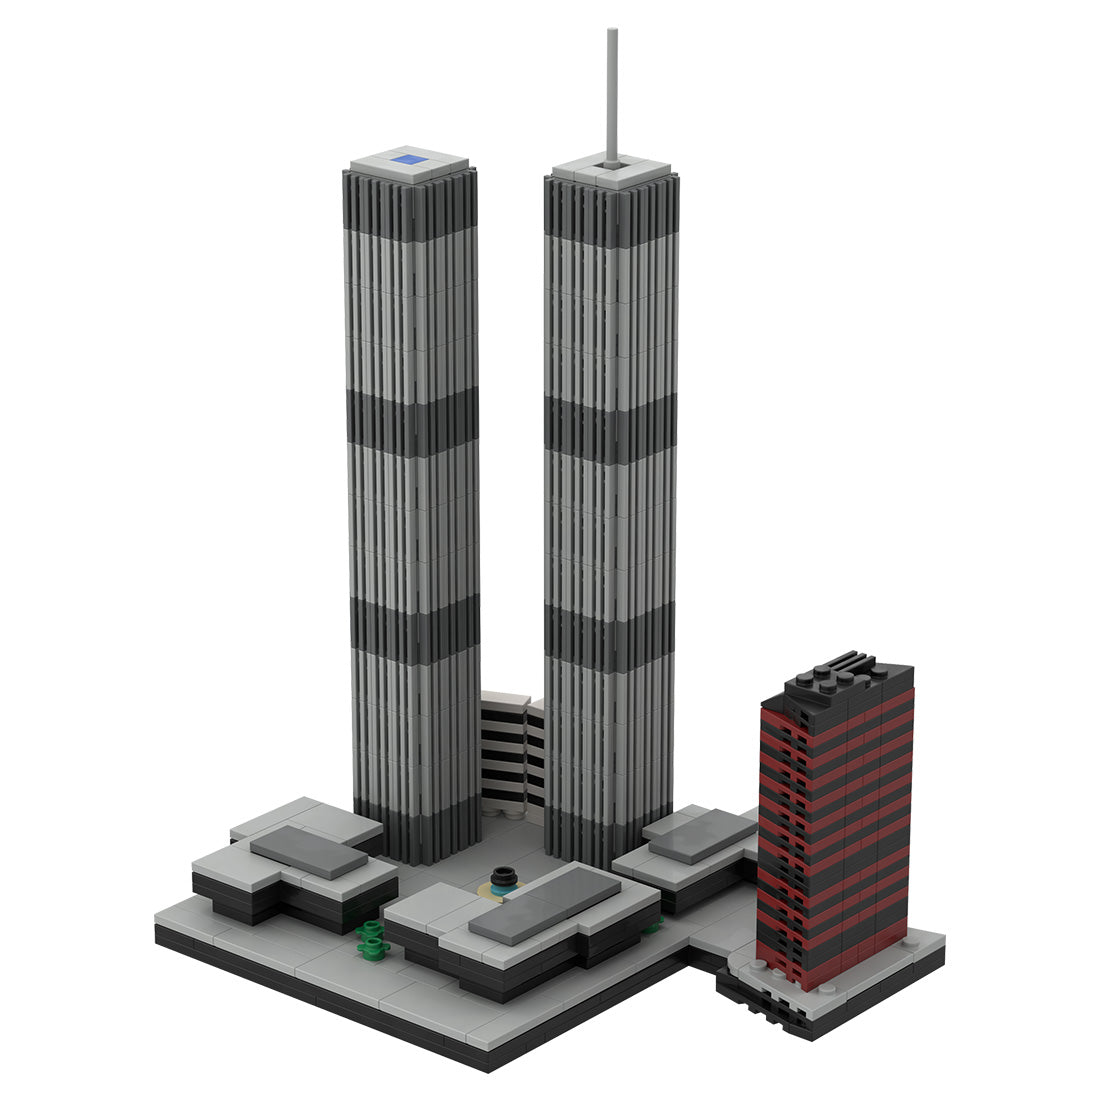 1/2000 World Trade Center (1973-2001)